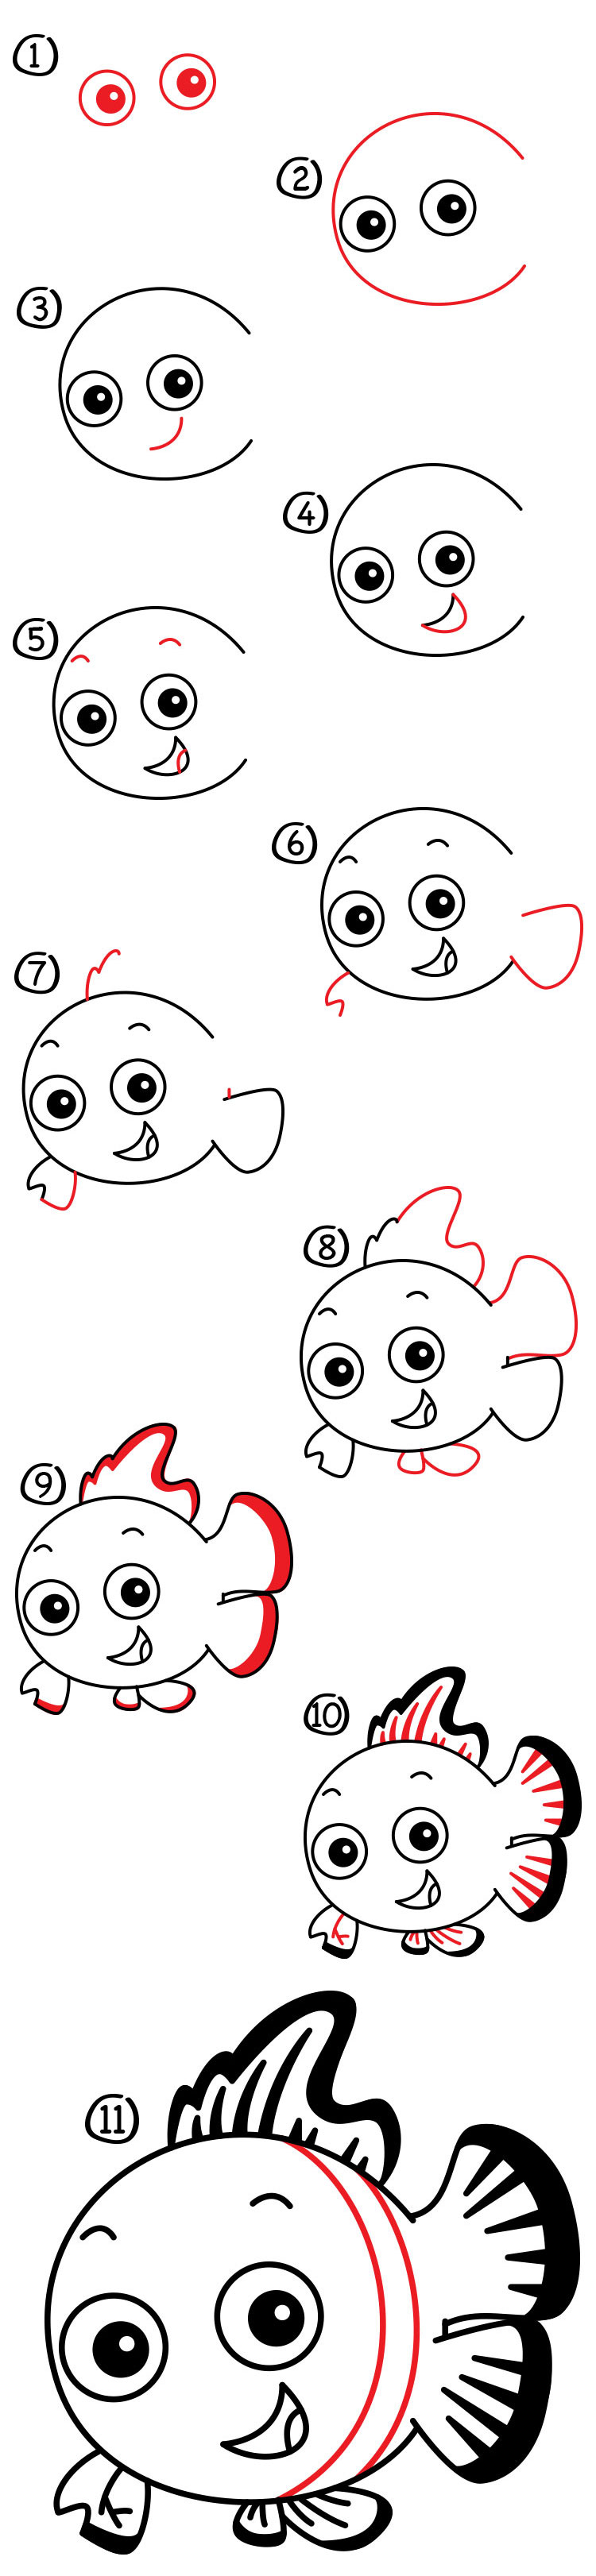 How to draw nemo